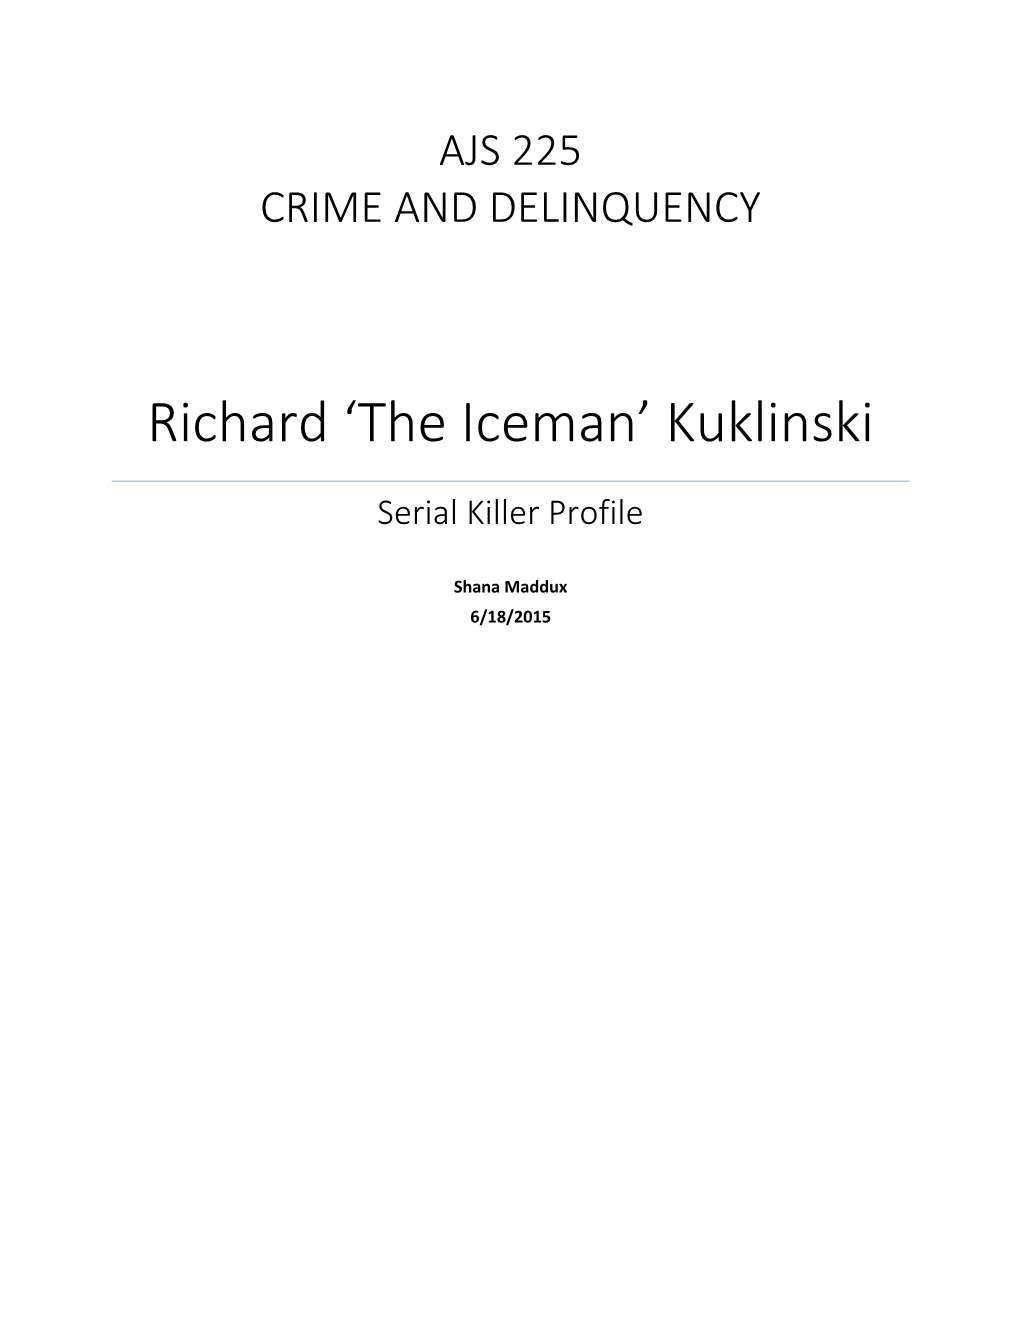 'The Iceman' Kuklinski